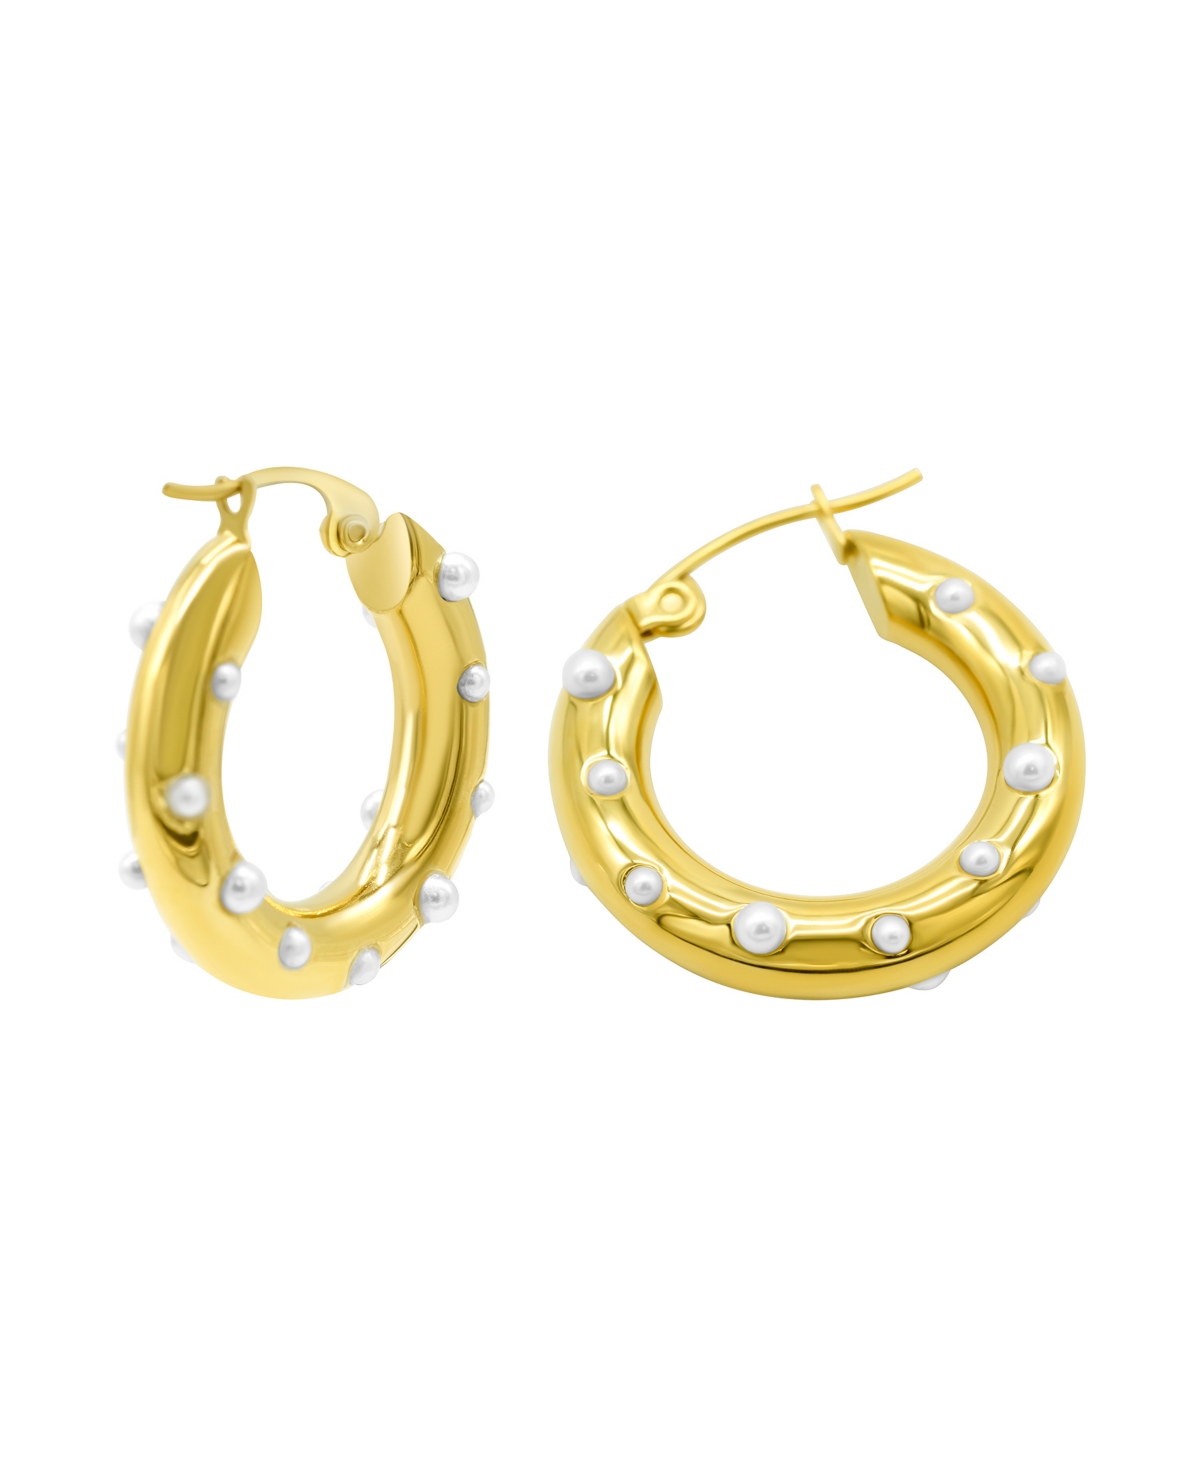 Tarnish Resistant 14K Gold-Plated Imitation Pearl-Studded Hoop Earrings - White